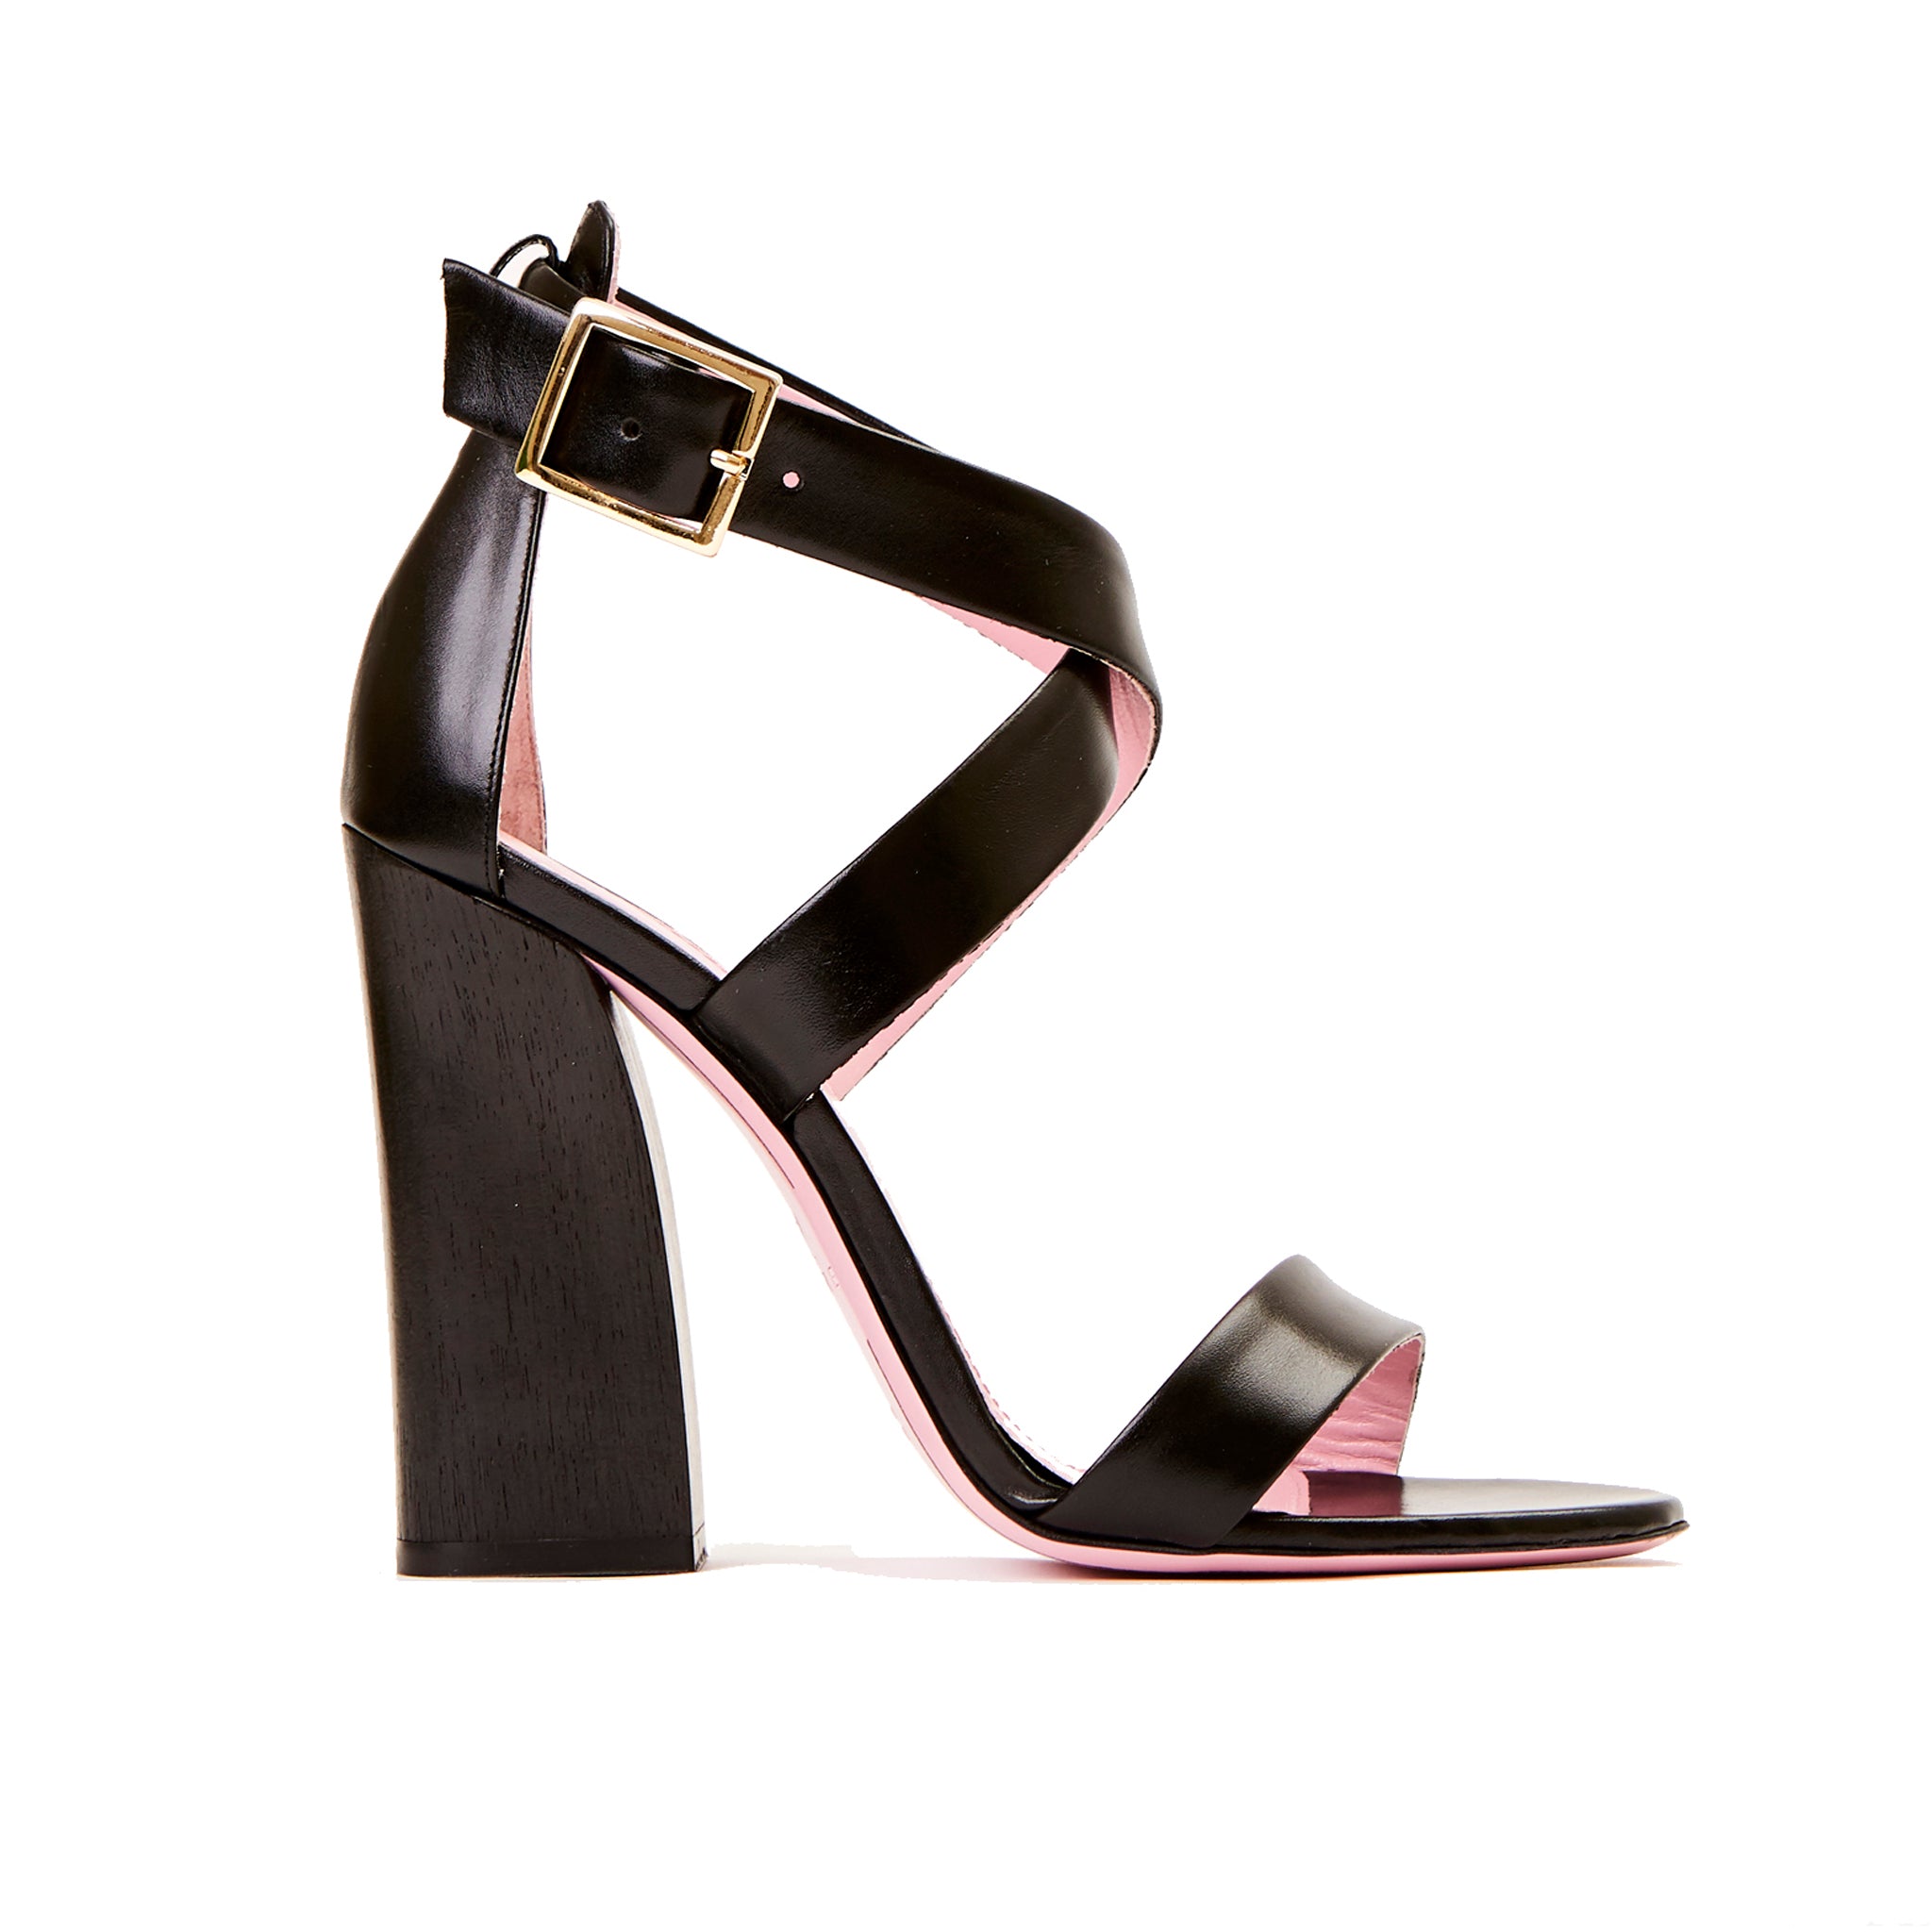 Phare Cross strap block heel sandal with wooden heel in black leather